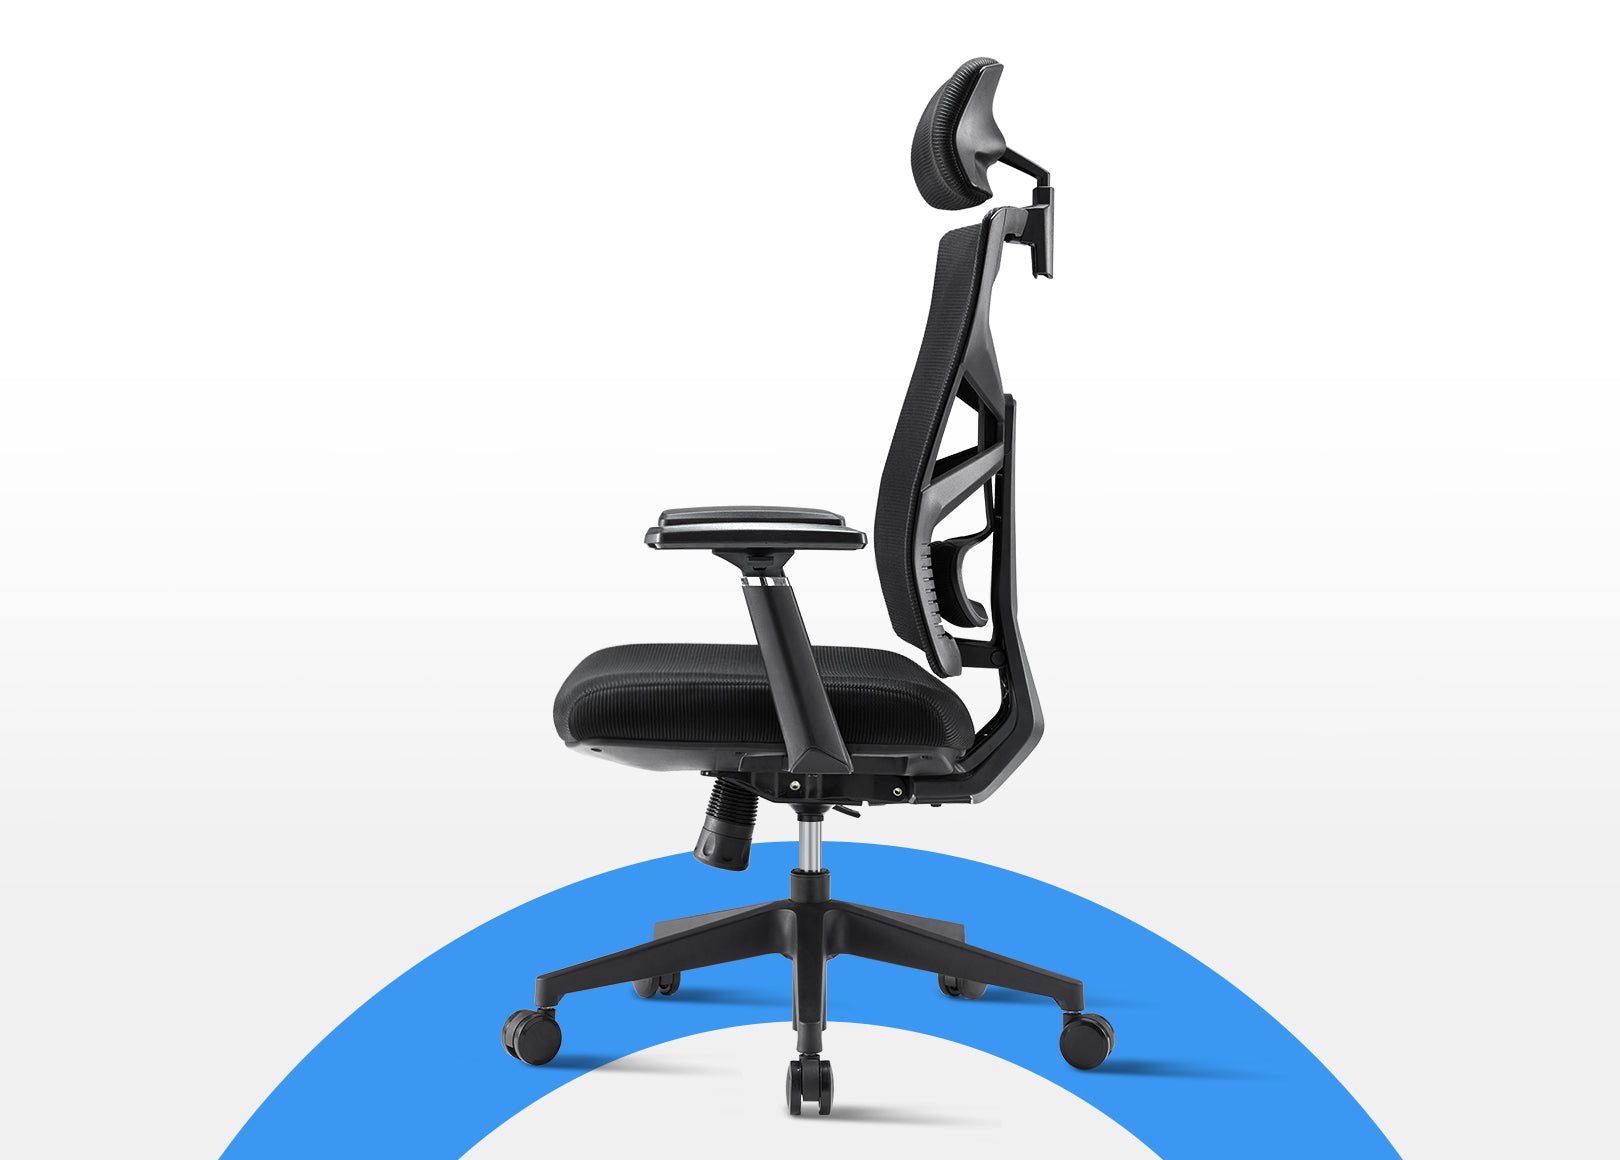 Black Voyager Pro Ergonomic Task Chair with Adjustable 3D Armrests and Lockable Backrest viewed from side